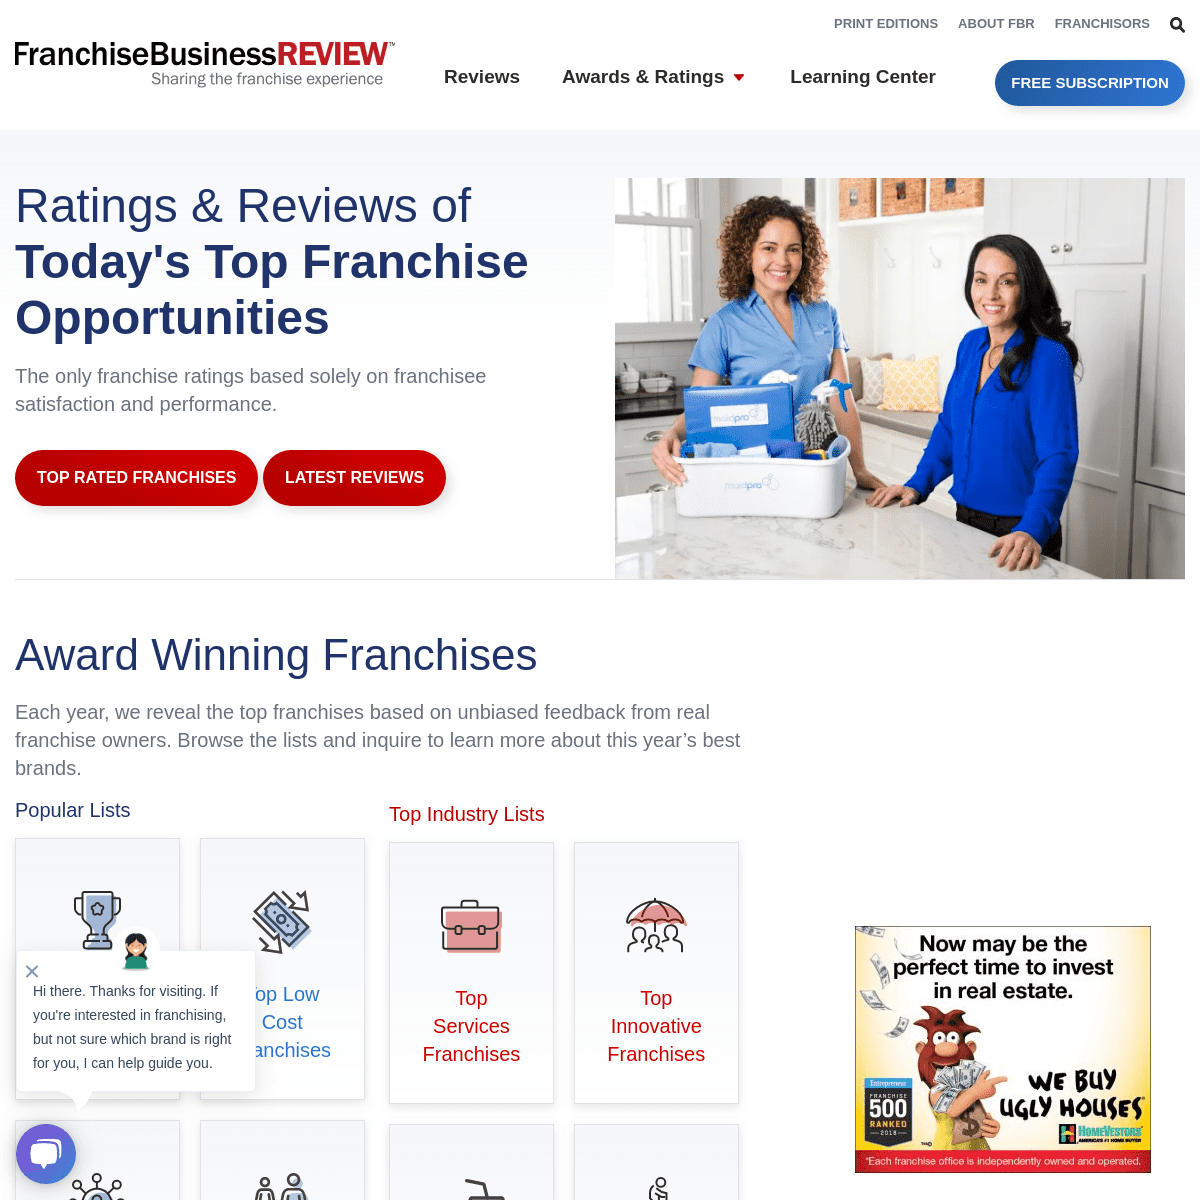 A complete backup of franchisebusinessreview.com